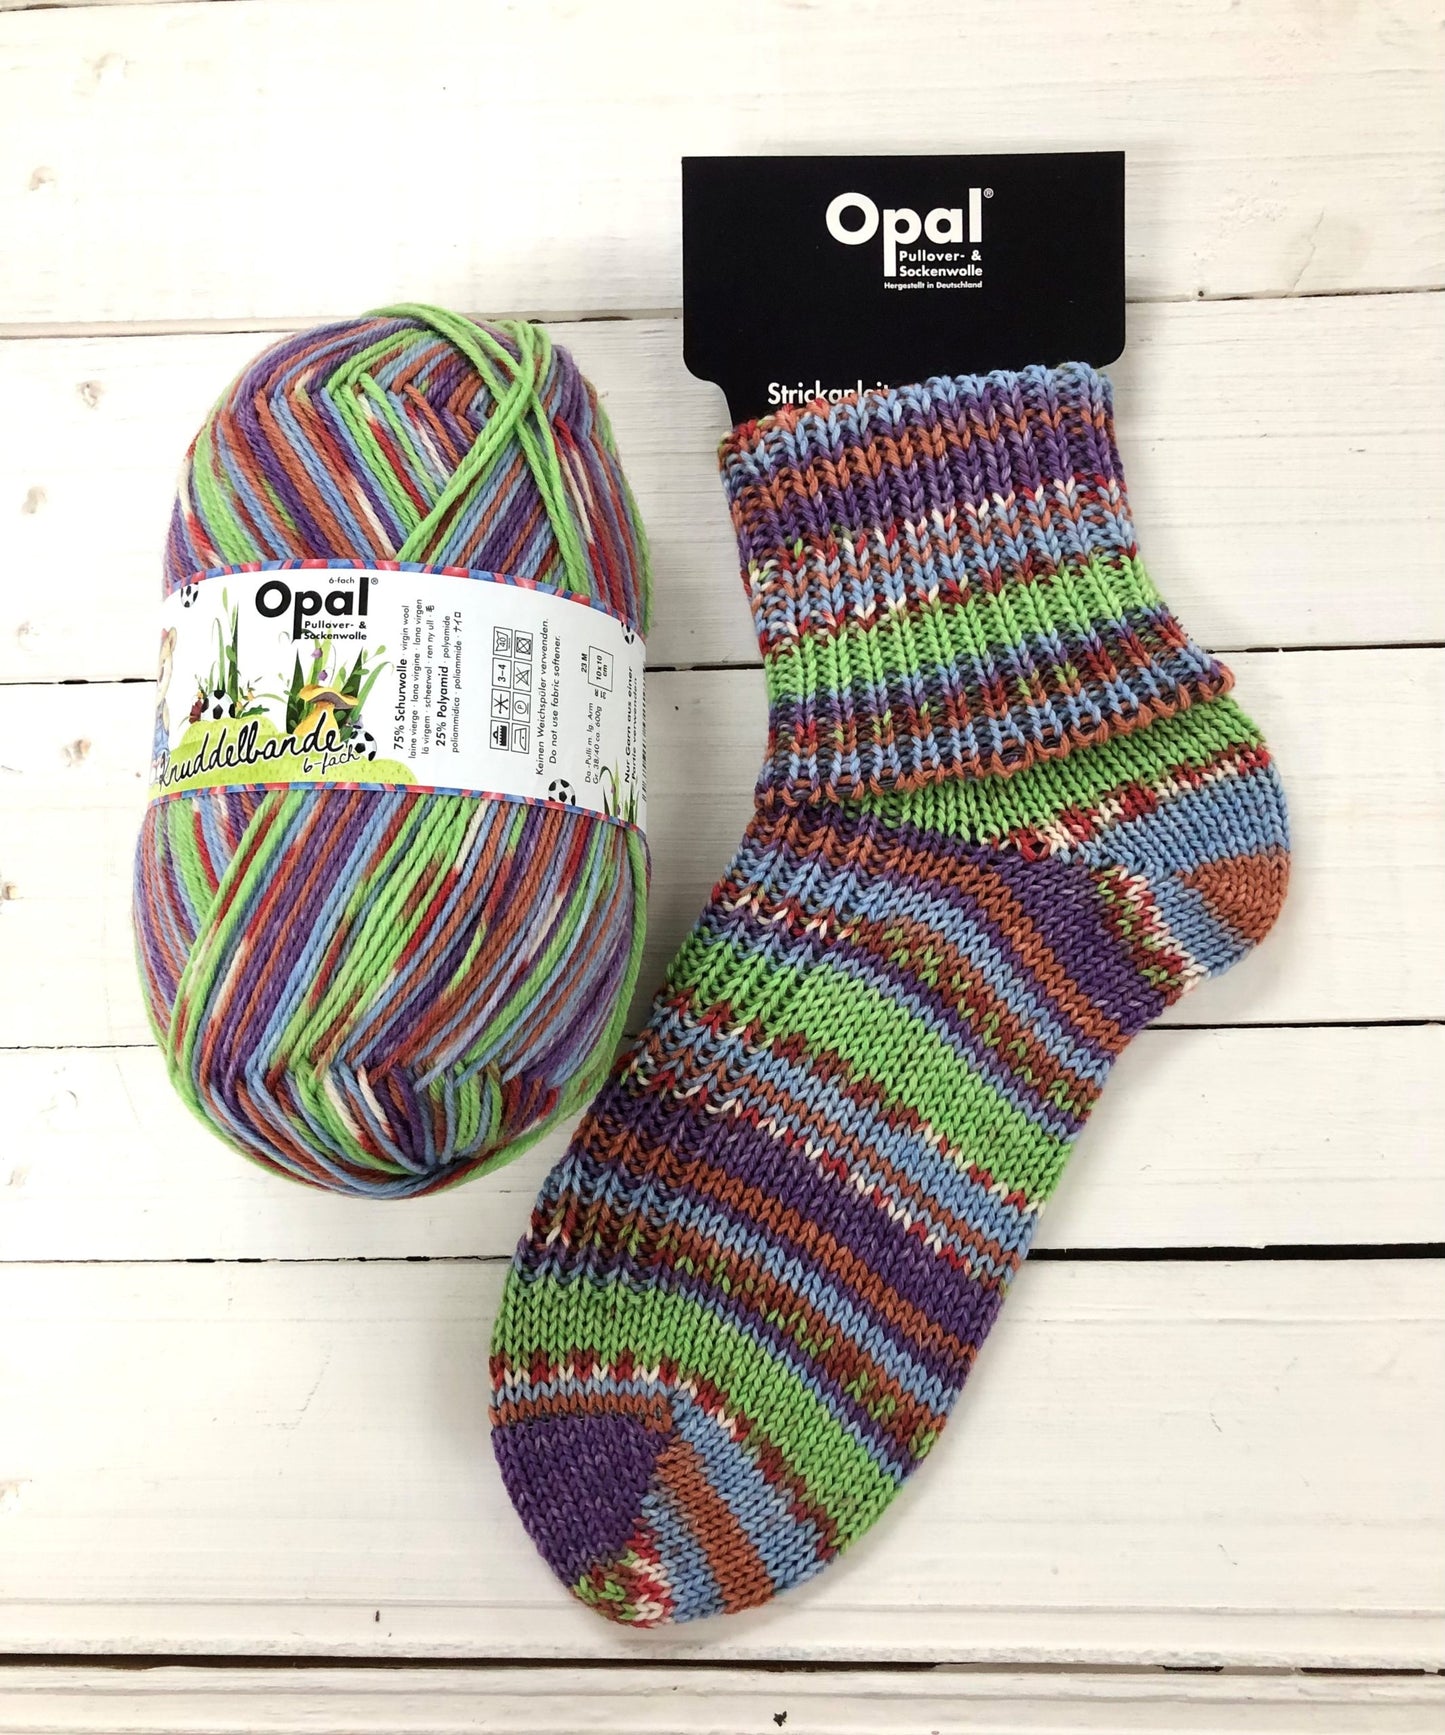 Opal Cuddle Gang Sock 6ply